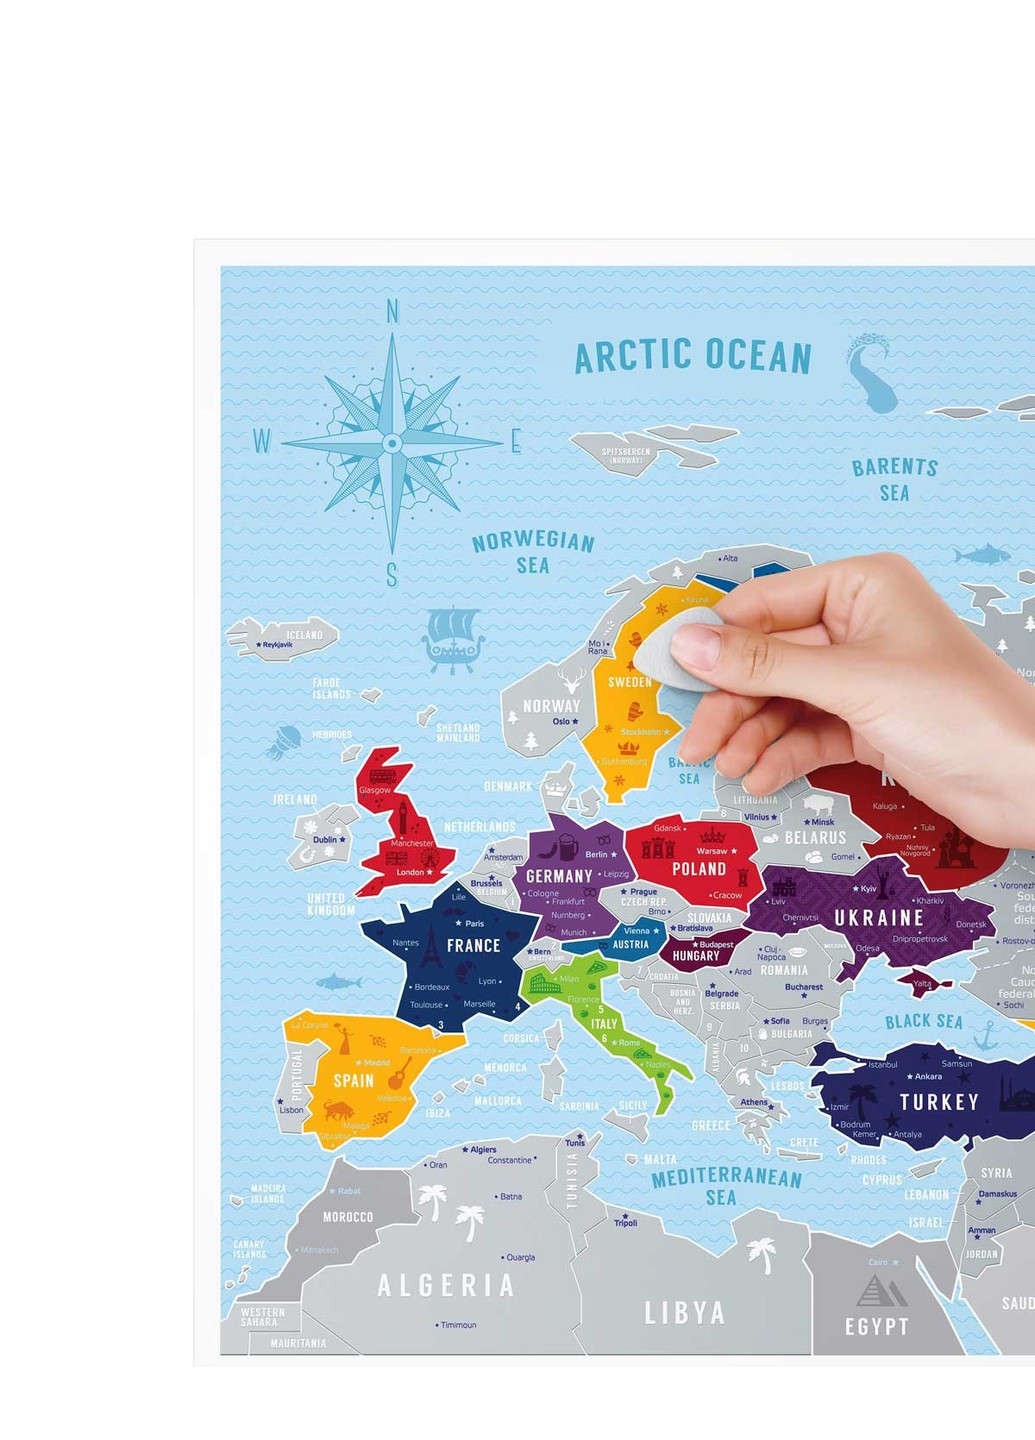 Скретч карта Европы "Travel Map Silver Europe" (тубус) 1DEA.me (254288753)